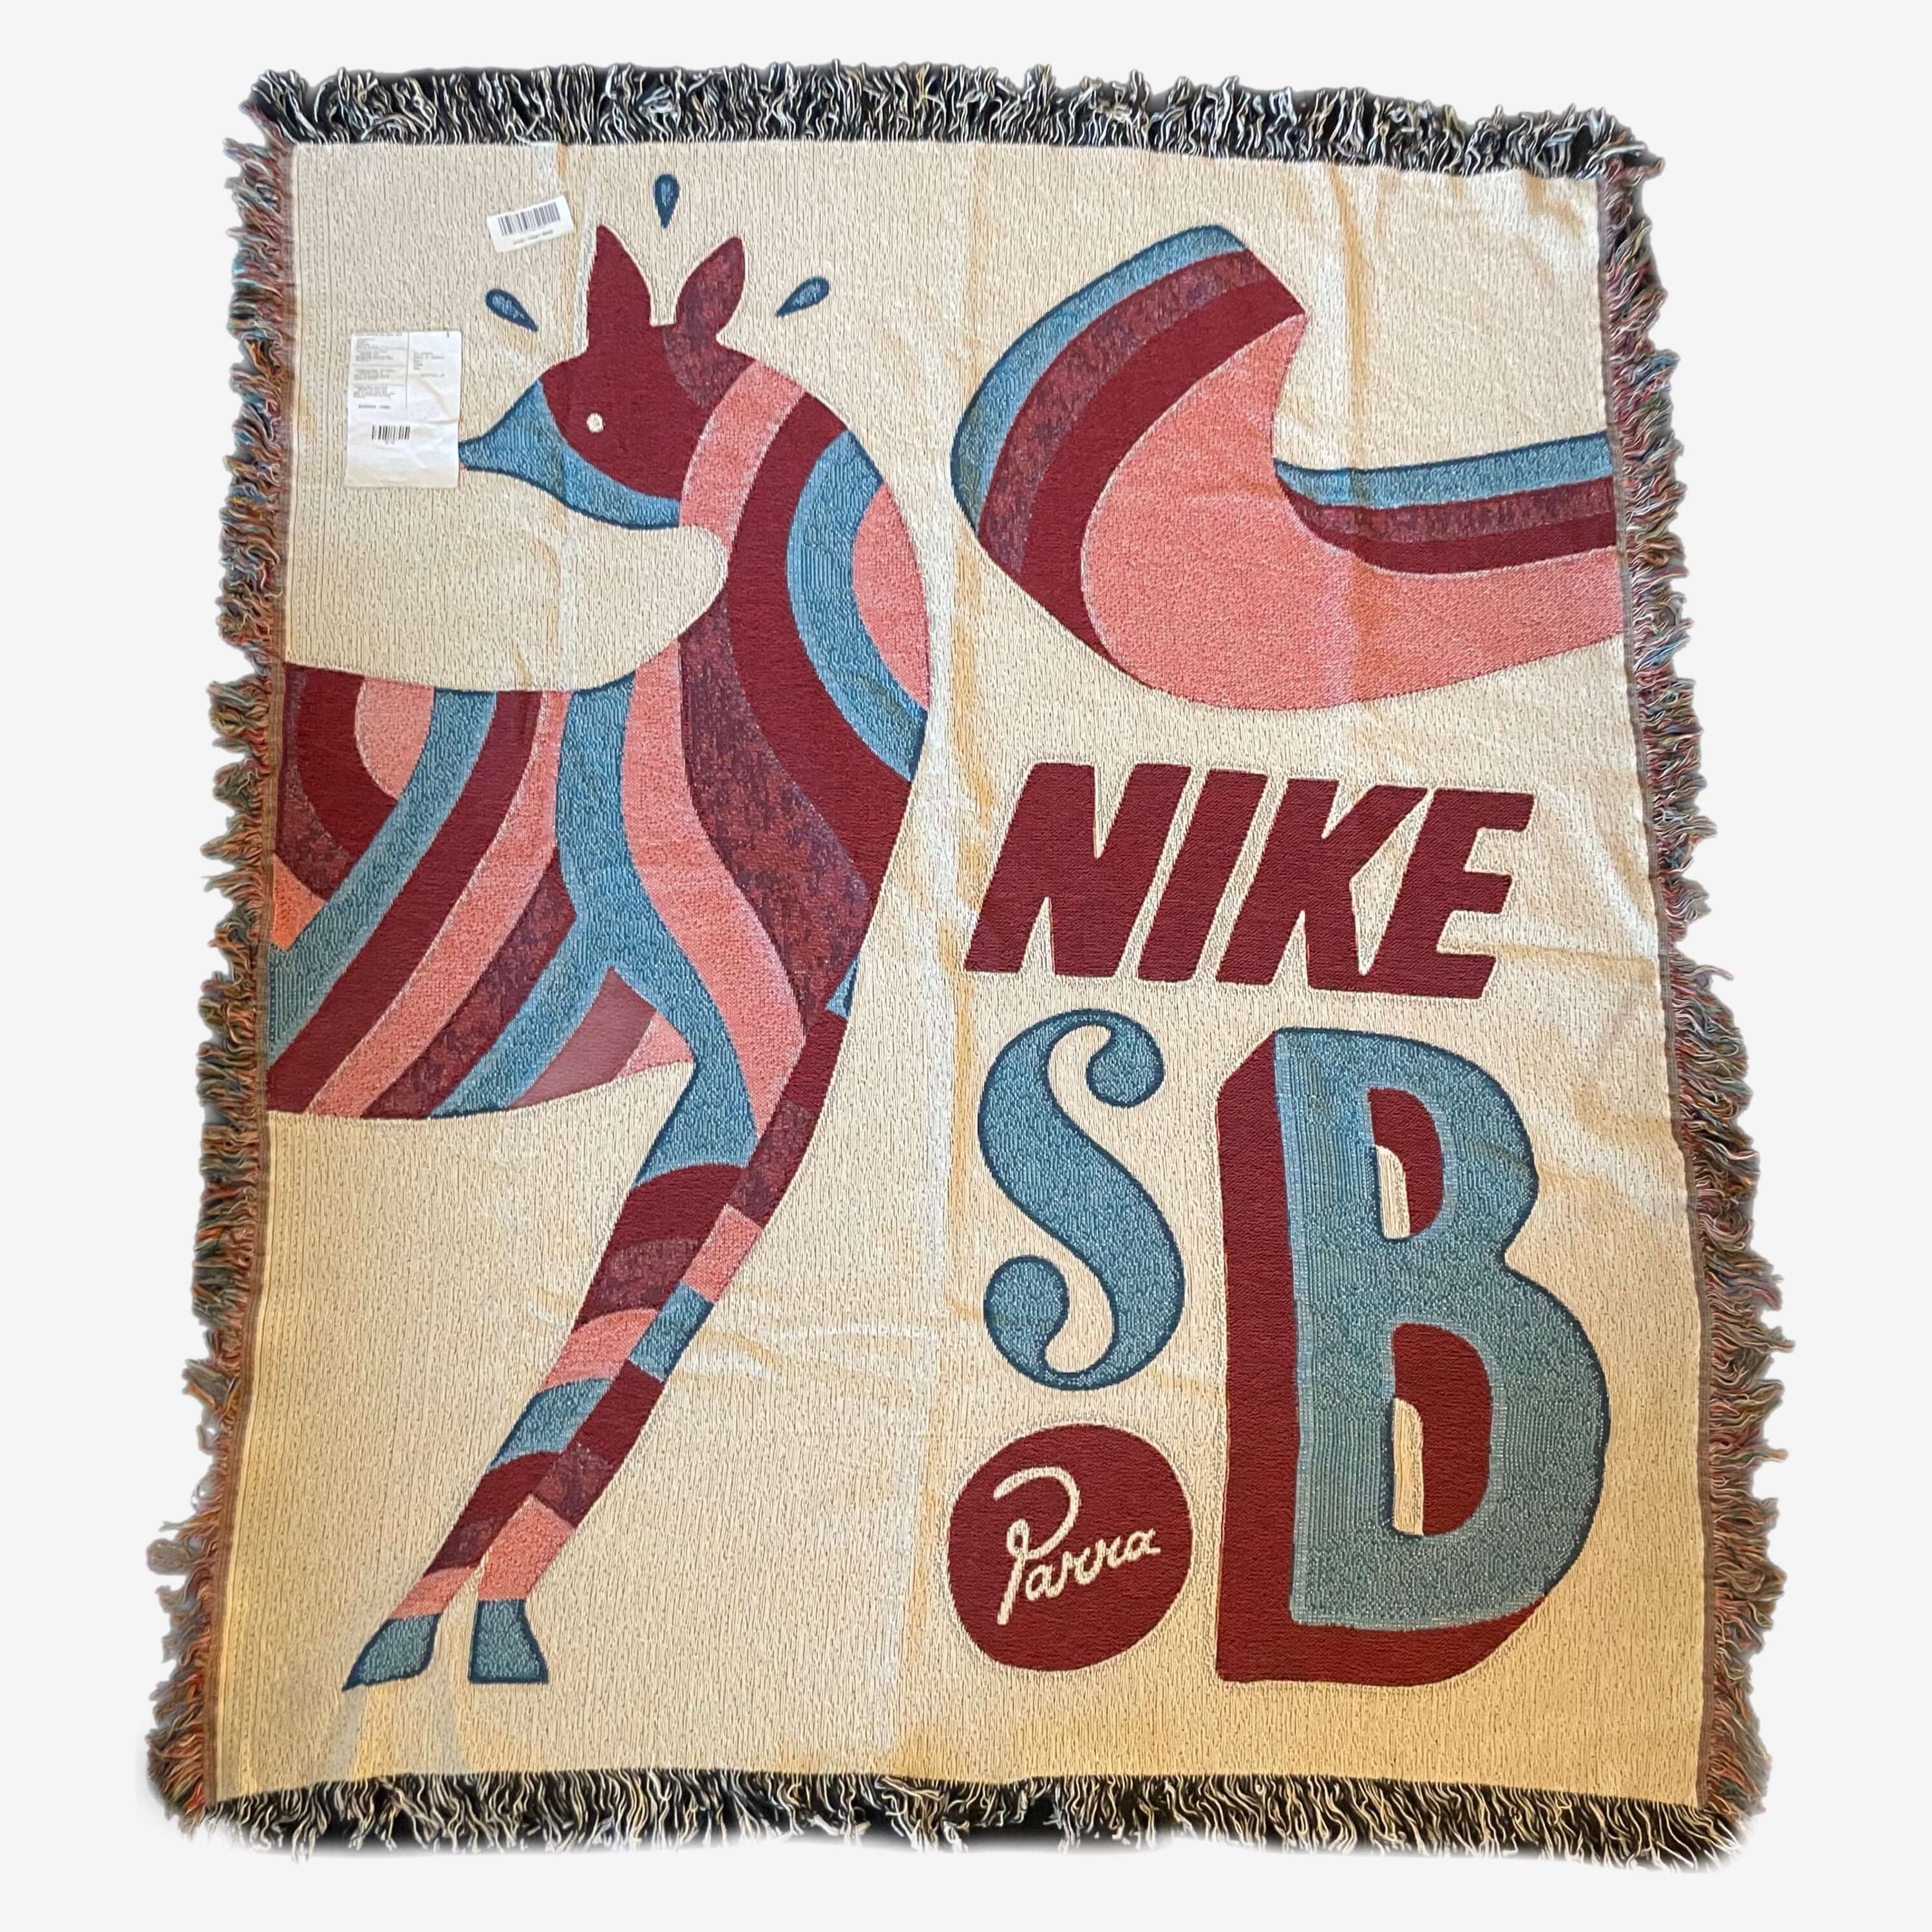 Parra x Nike SB Skate Shop Blanket (Friends & Family)